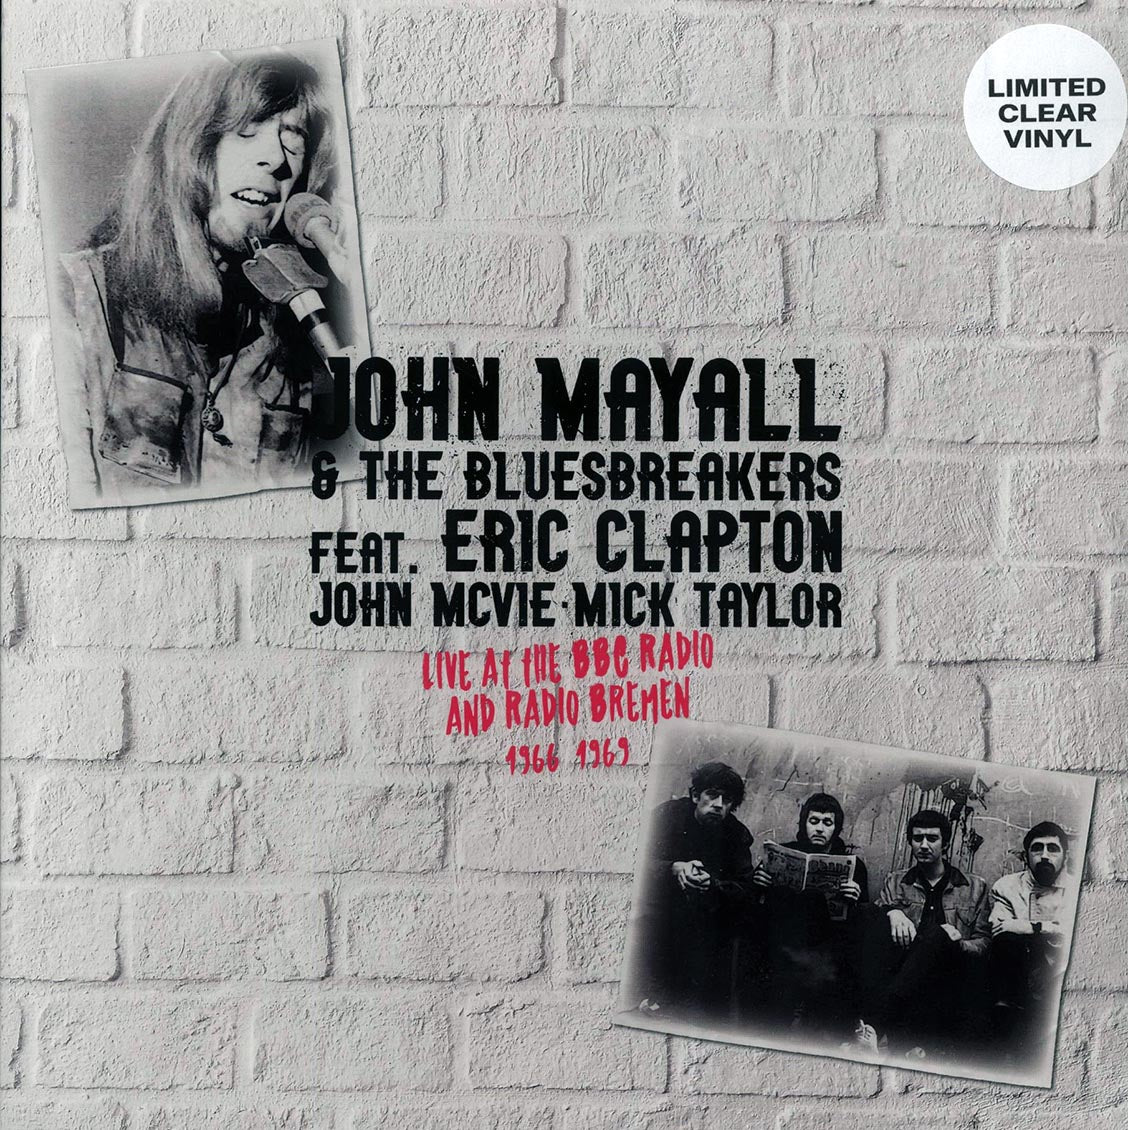 John Mayall & The Bluesbreakers, Eric Clapton, John Mcvie, Mick Taylor - Live At The BBC Radio Bremen 1966 & 1969 (clear vinyl) - Vinyl LP